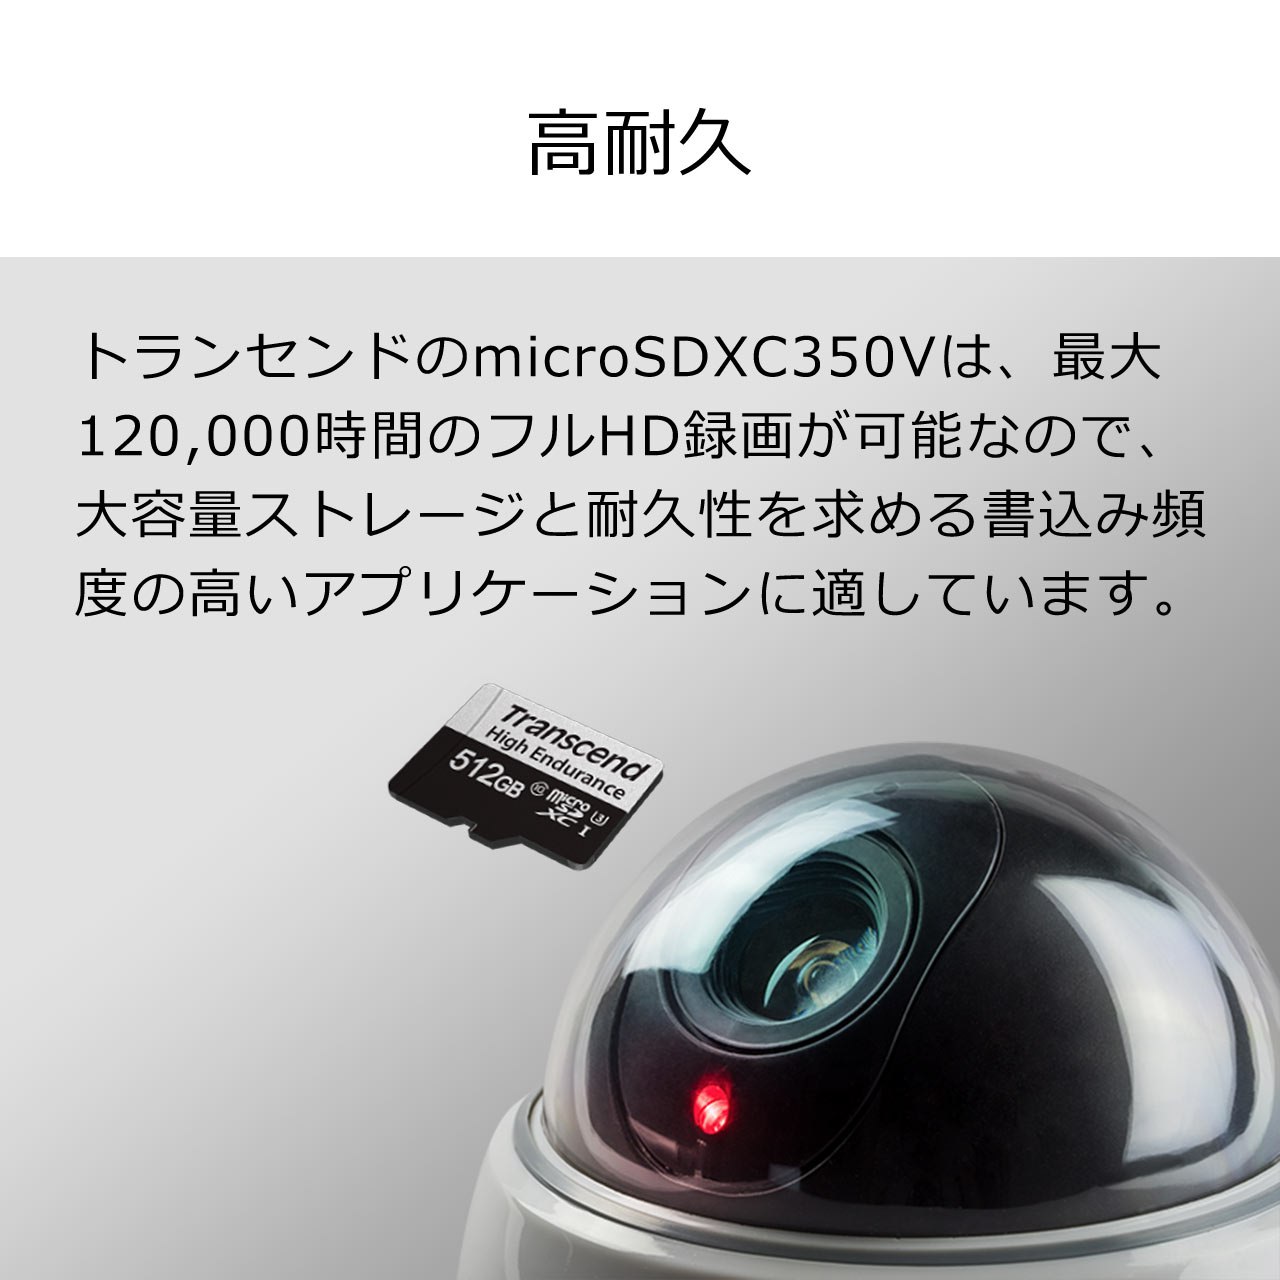 microSDXCカード 512GB Class10 UHS-I U3 高耐久 SDカード変換アダプタ付き Nintendo Switch ROG Ally 対応 Transcend製 TS512GUSD350V